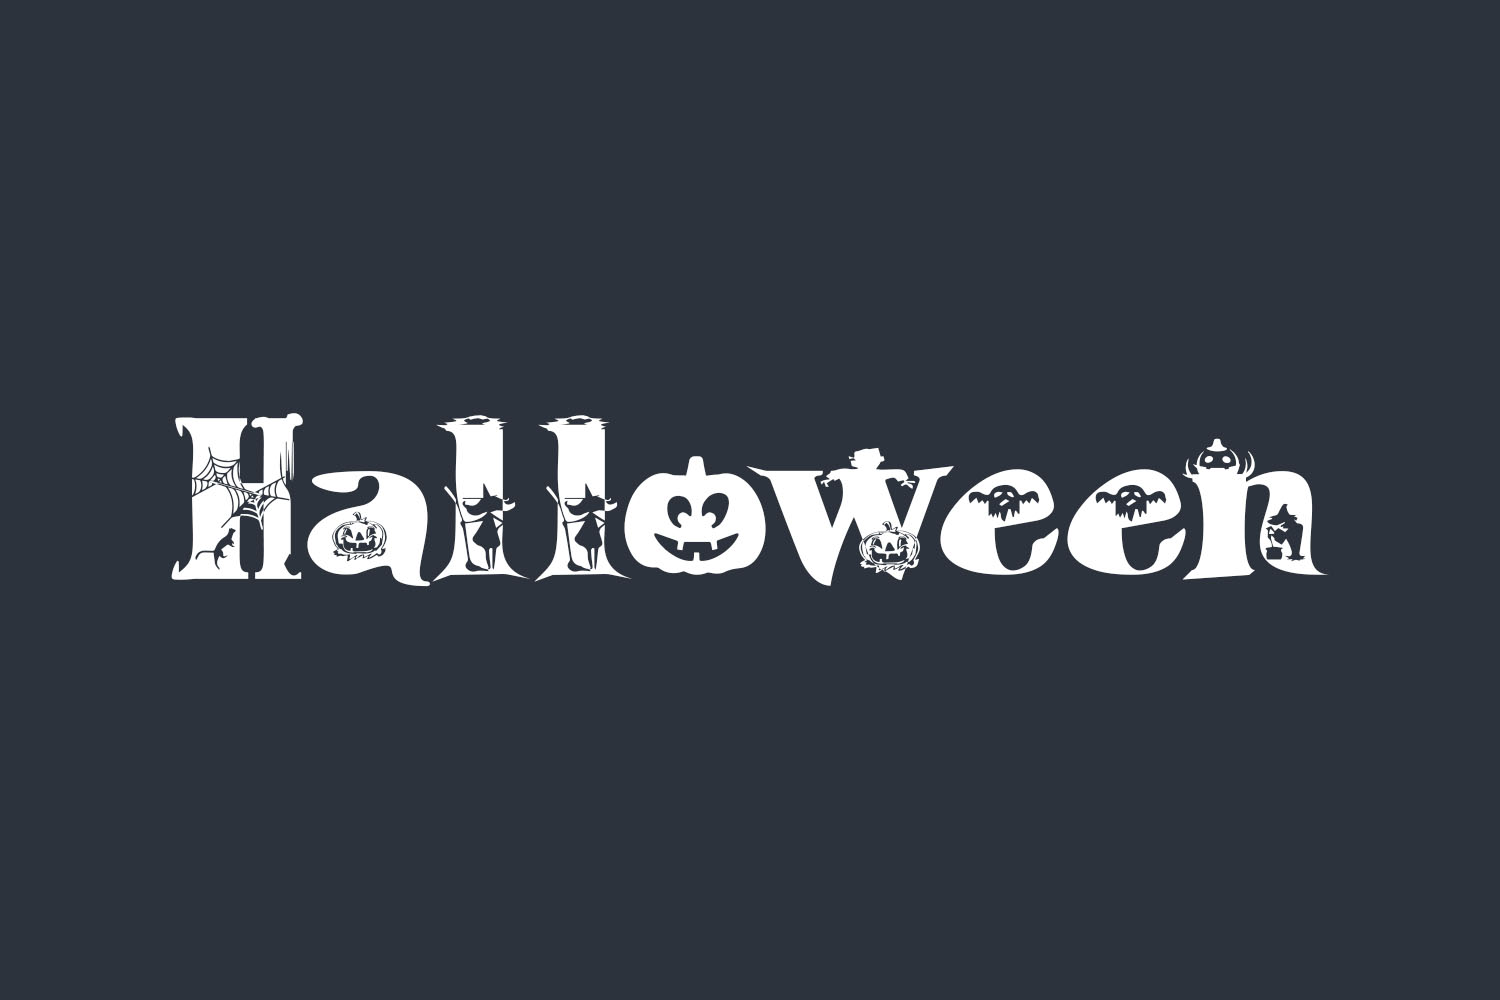 Halloween Free Font